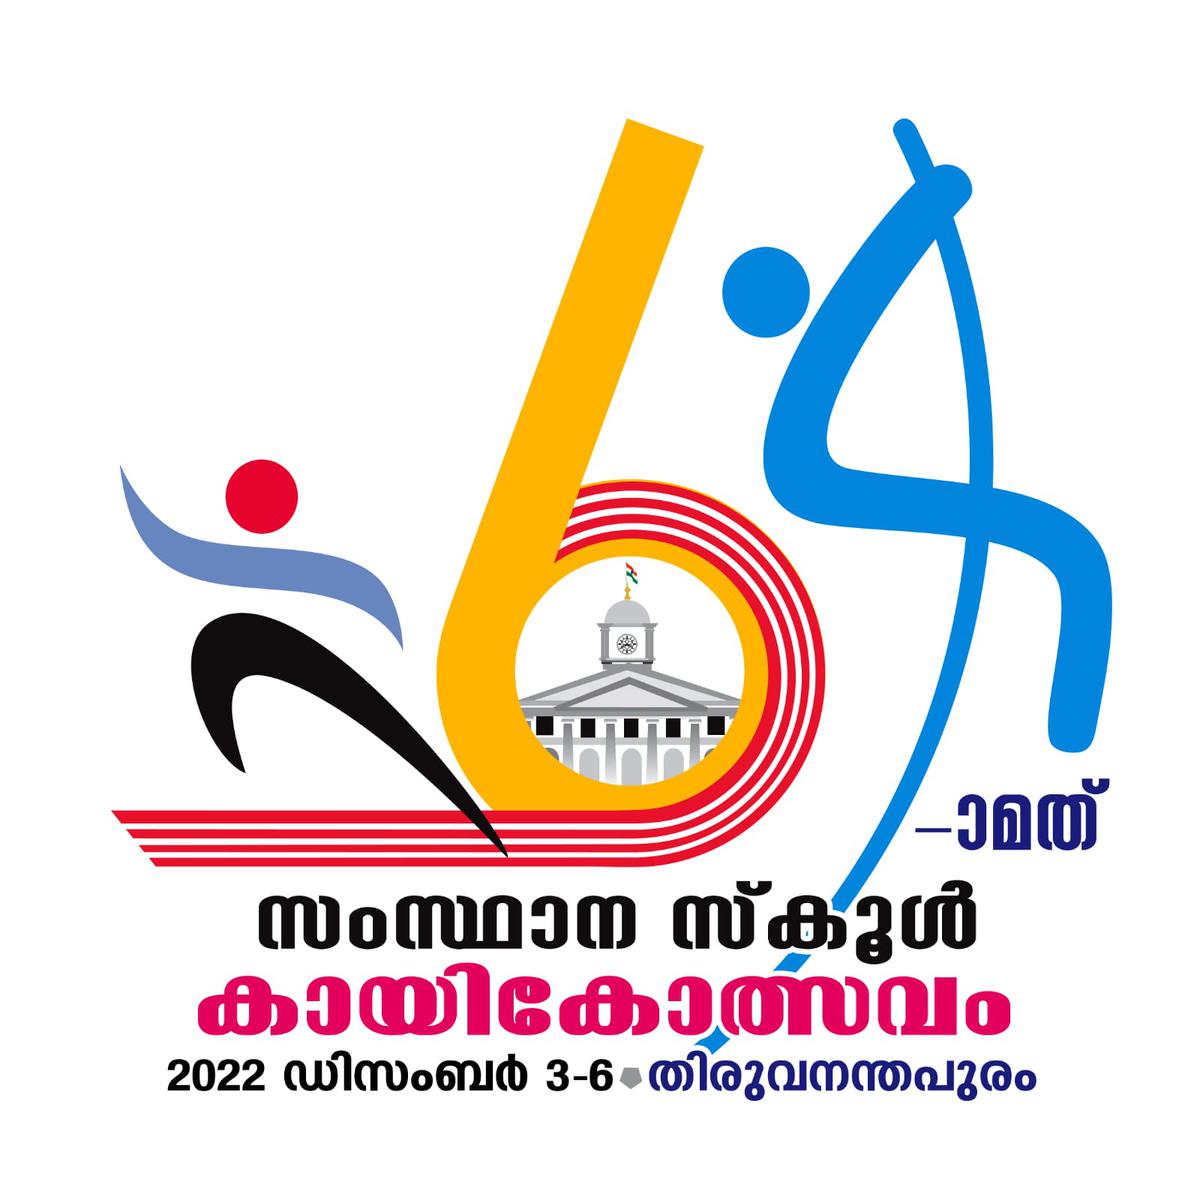 KSDMA Logo - Kerala State Disaster Management Authority